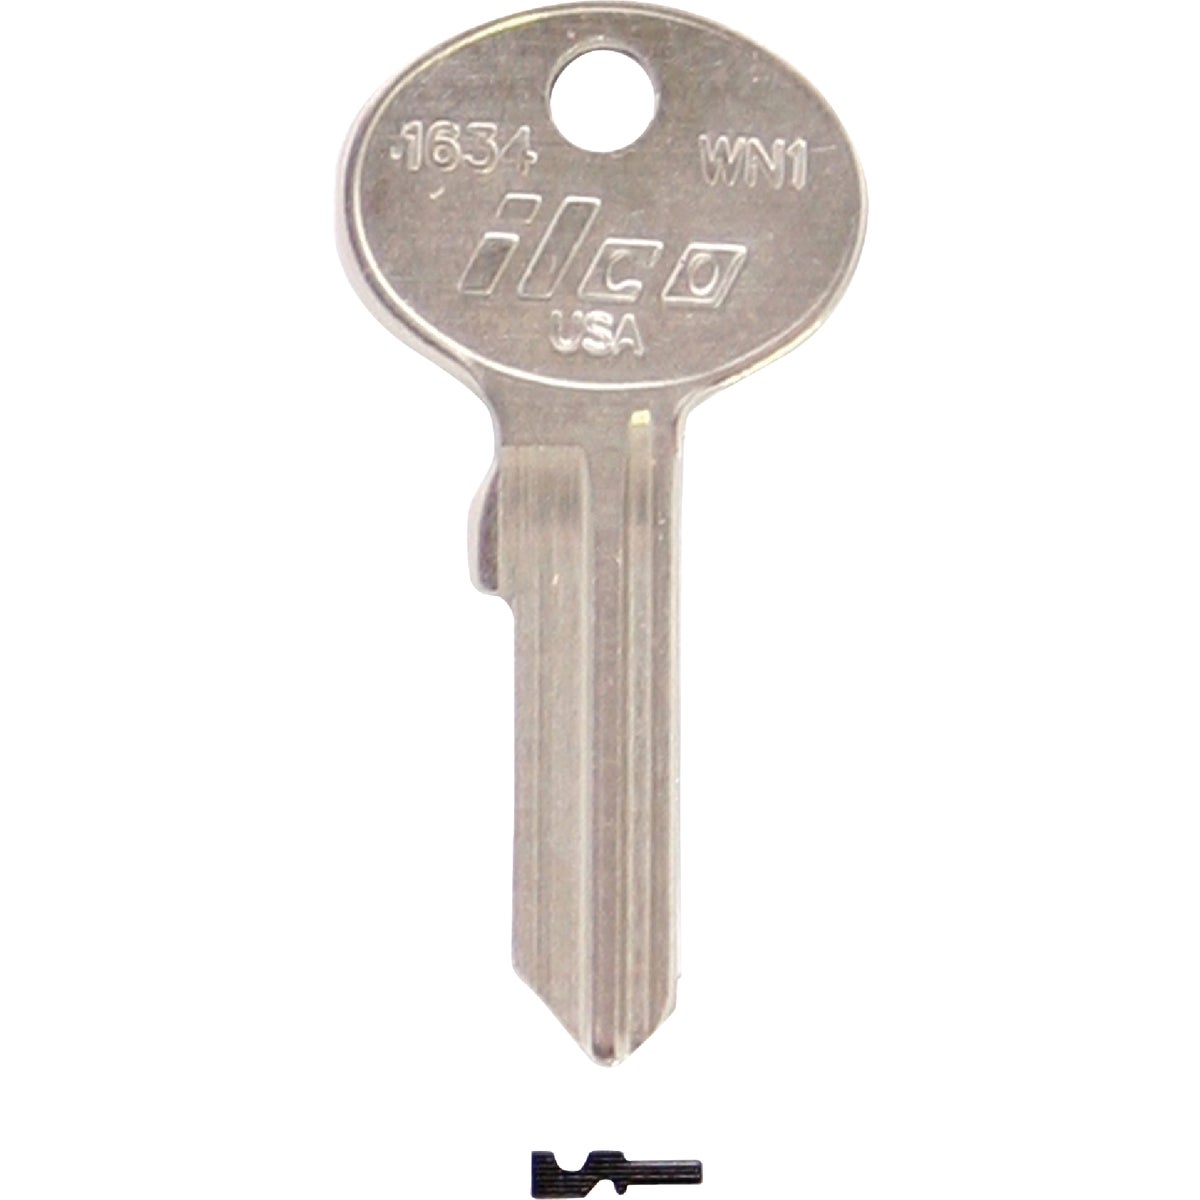 ILCO Wind Nickel Plated Mailbox Key, 1634 (10-Pack)